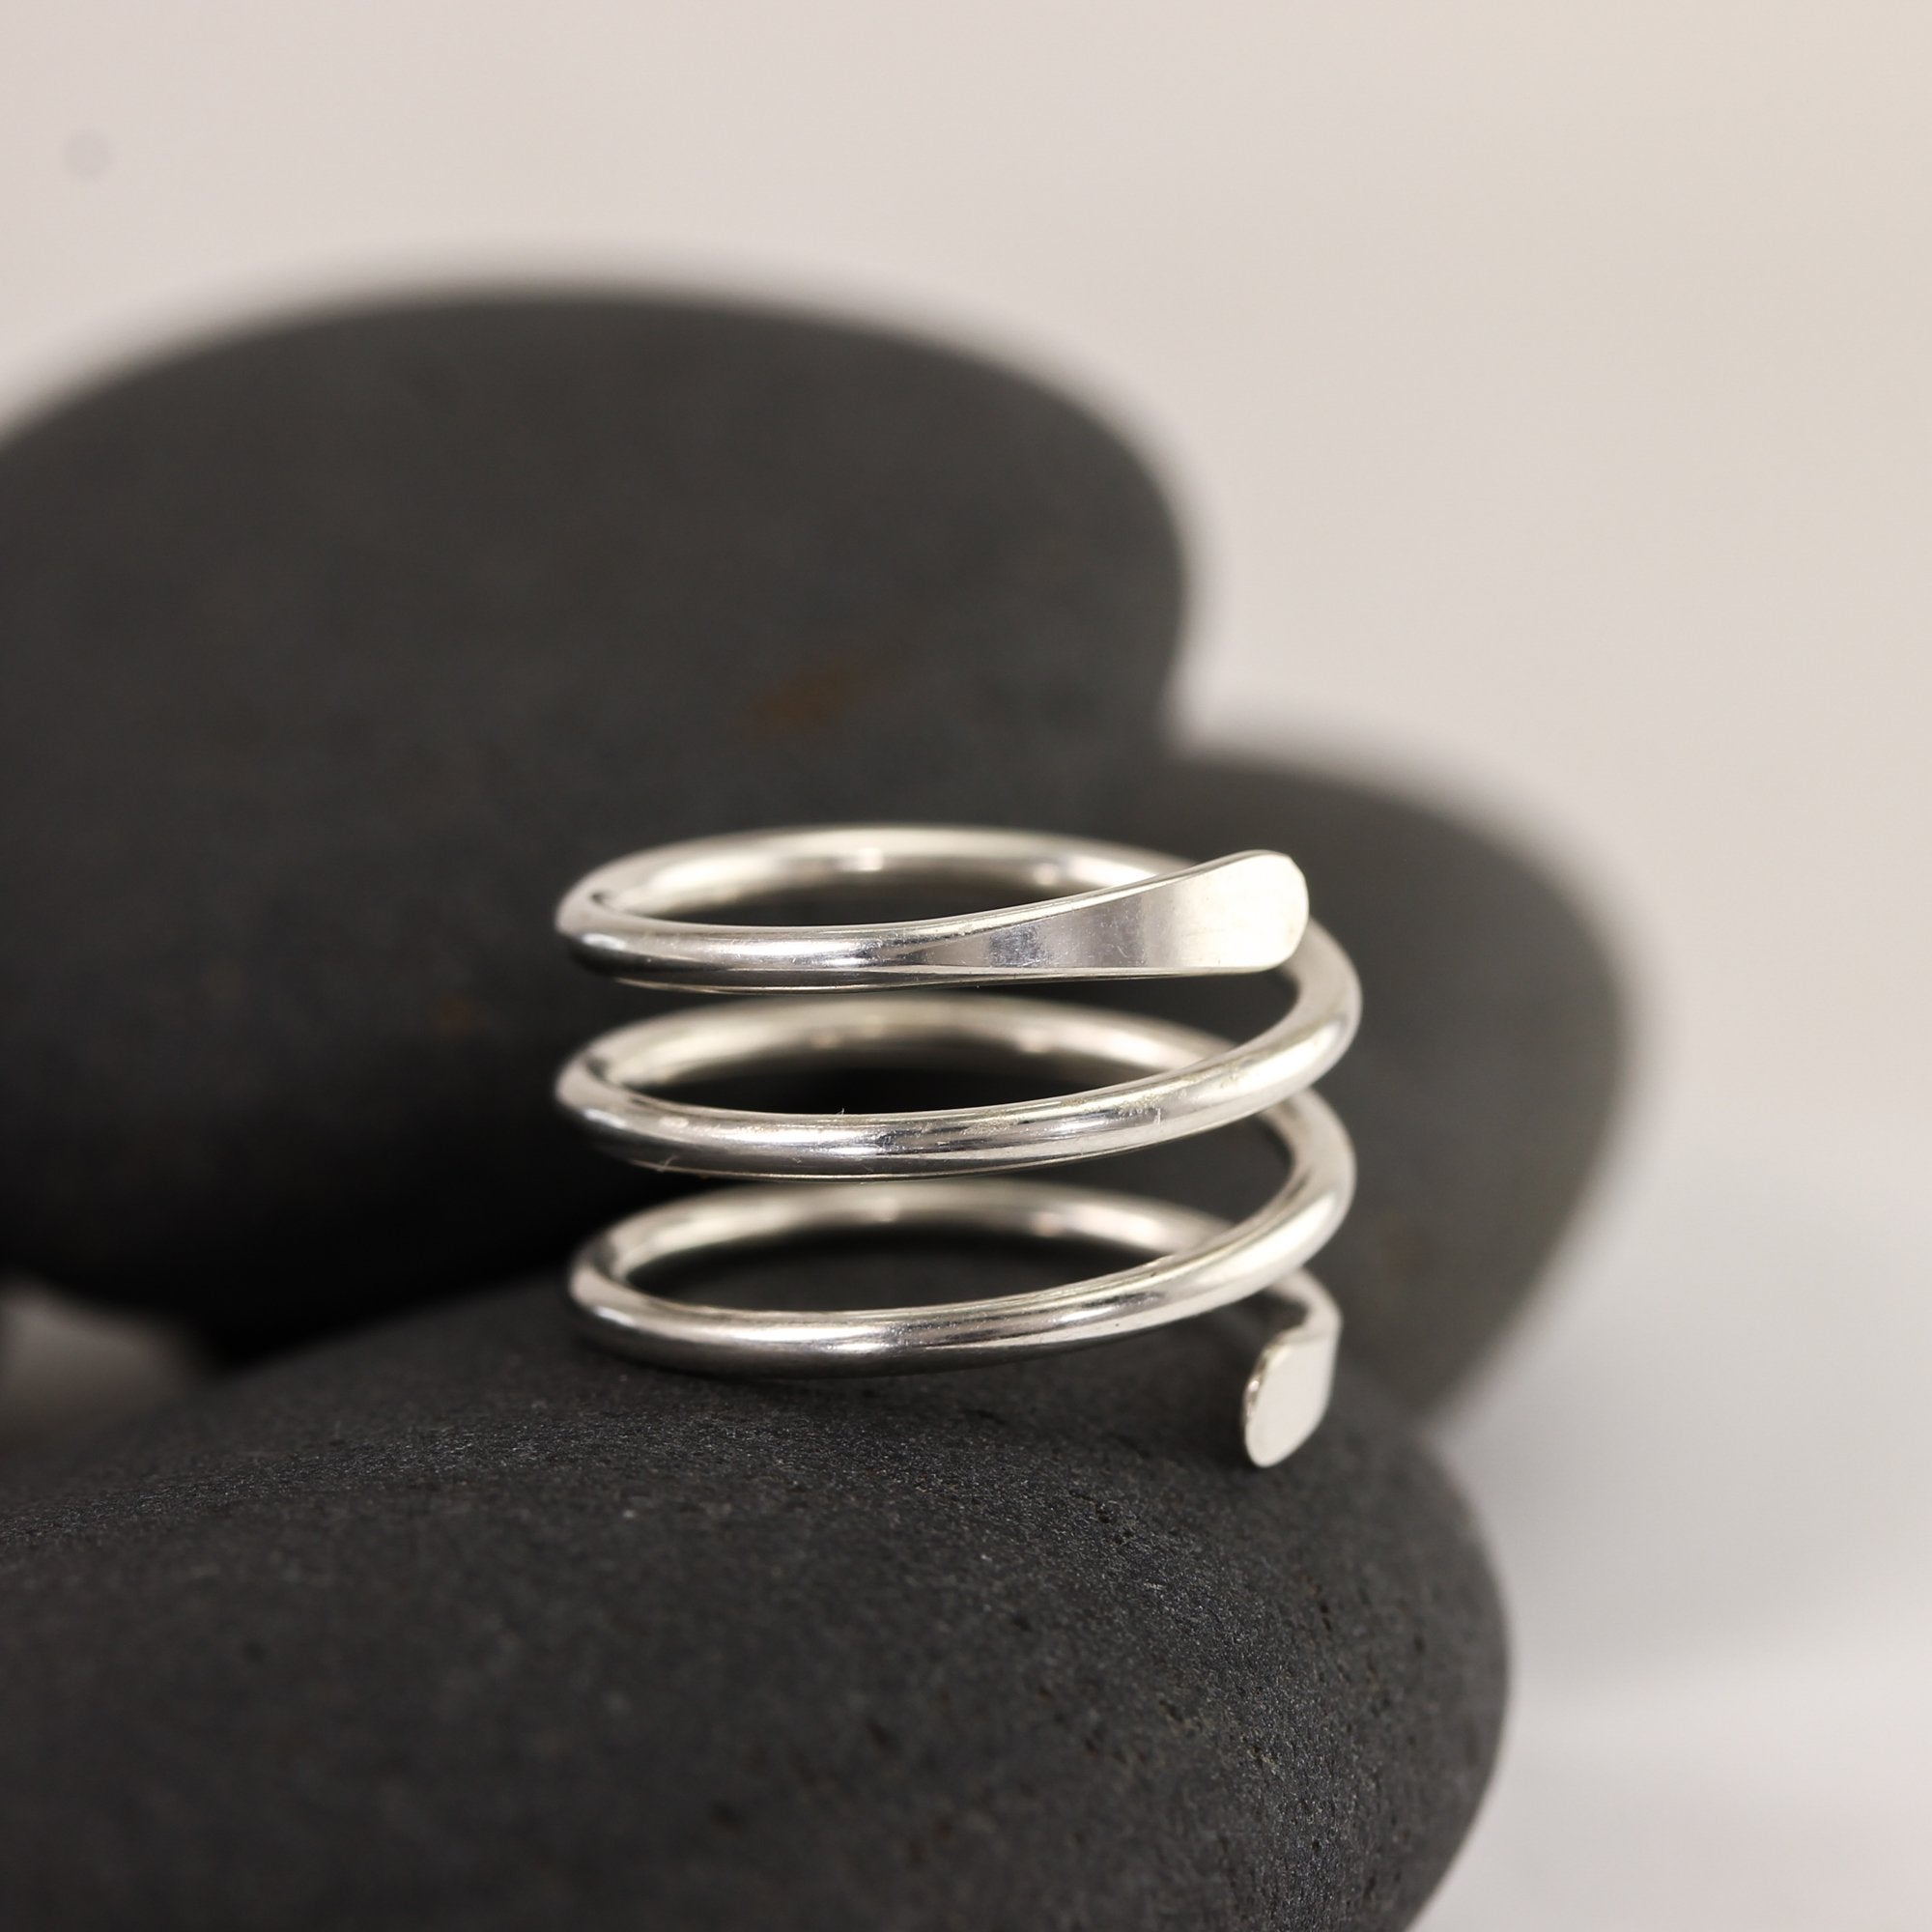 Spiral Ring in Silver, Gold or Rose Gold – Lotus Stone Design